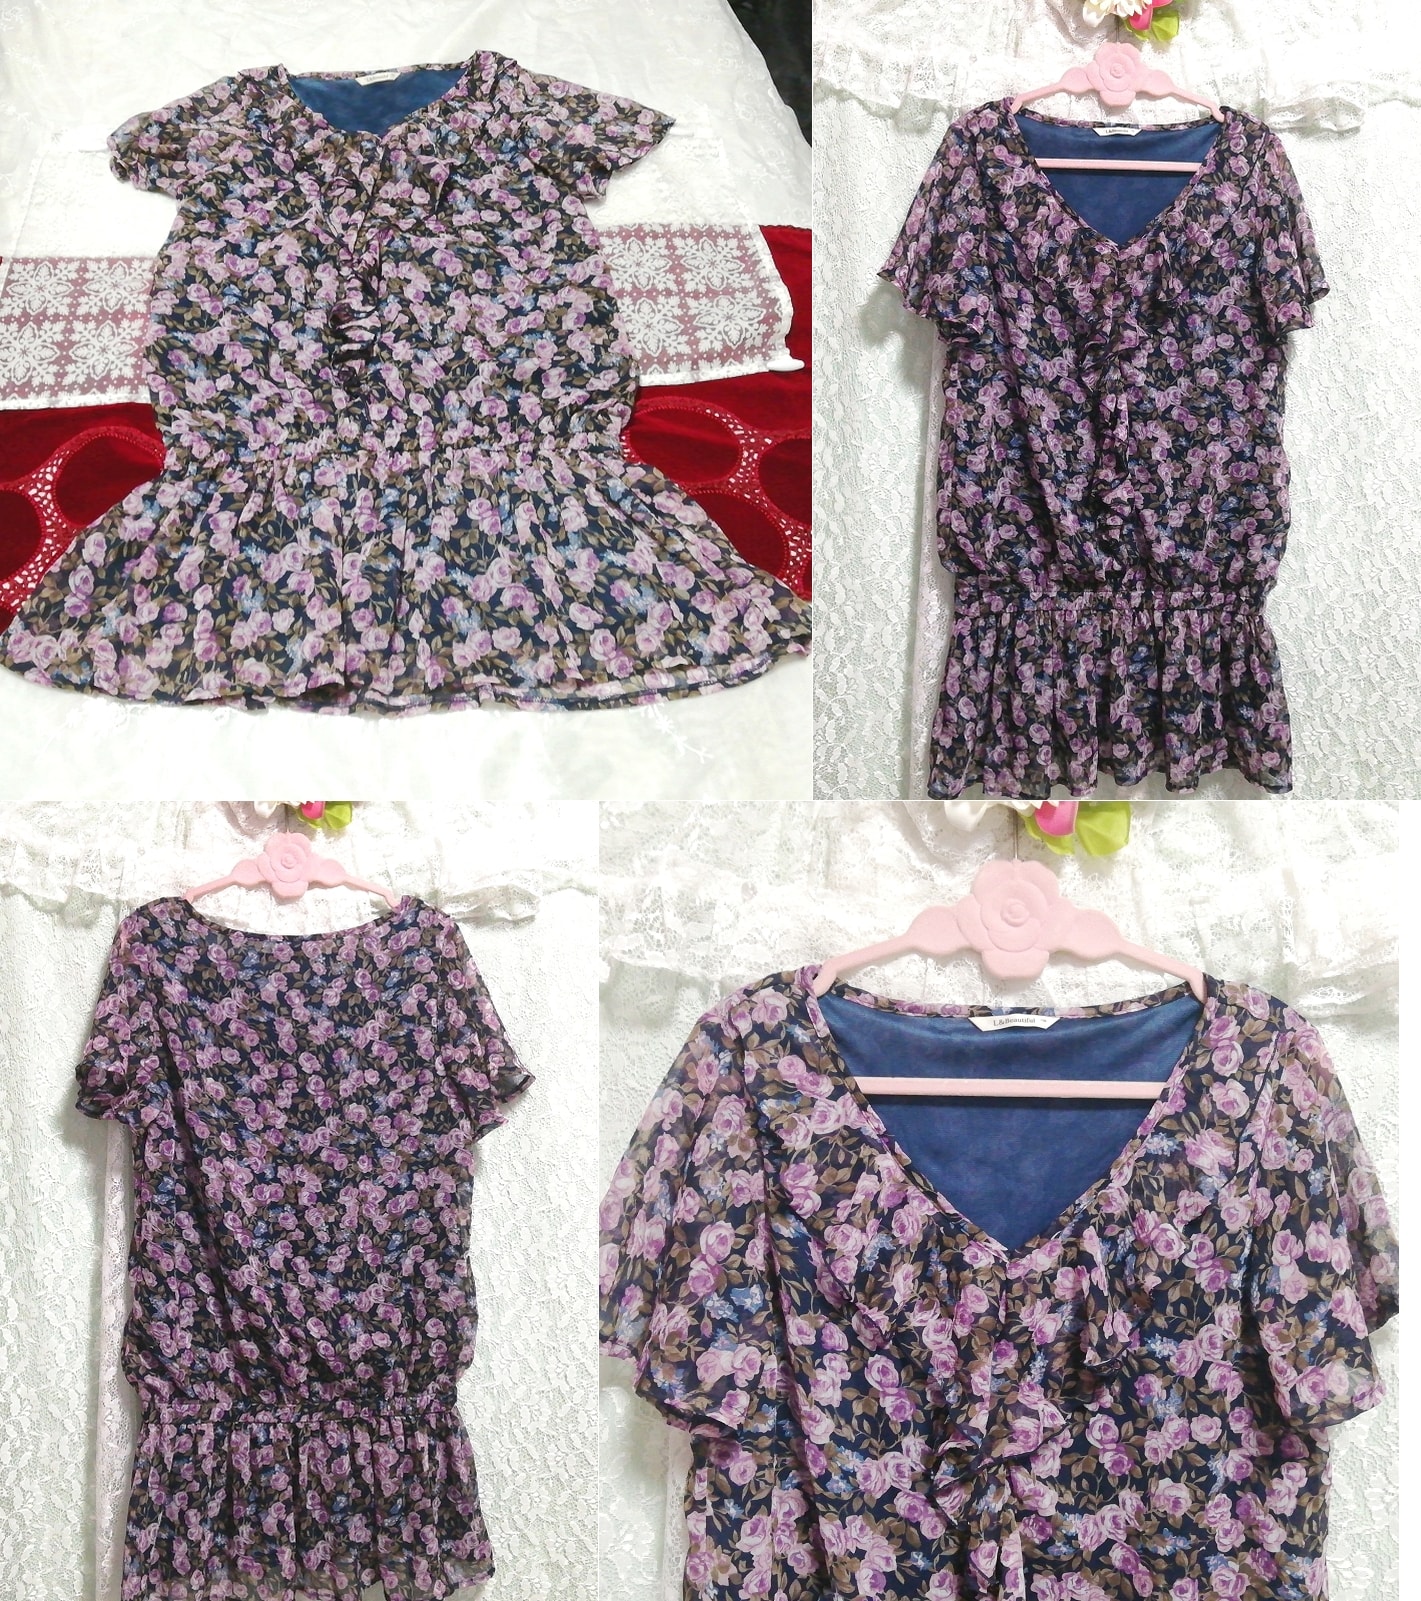 Black purple blue floral pattern chiffon negligee nightgown tunic, knee length skirt, m size